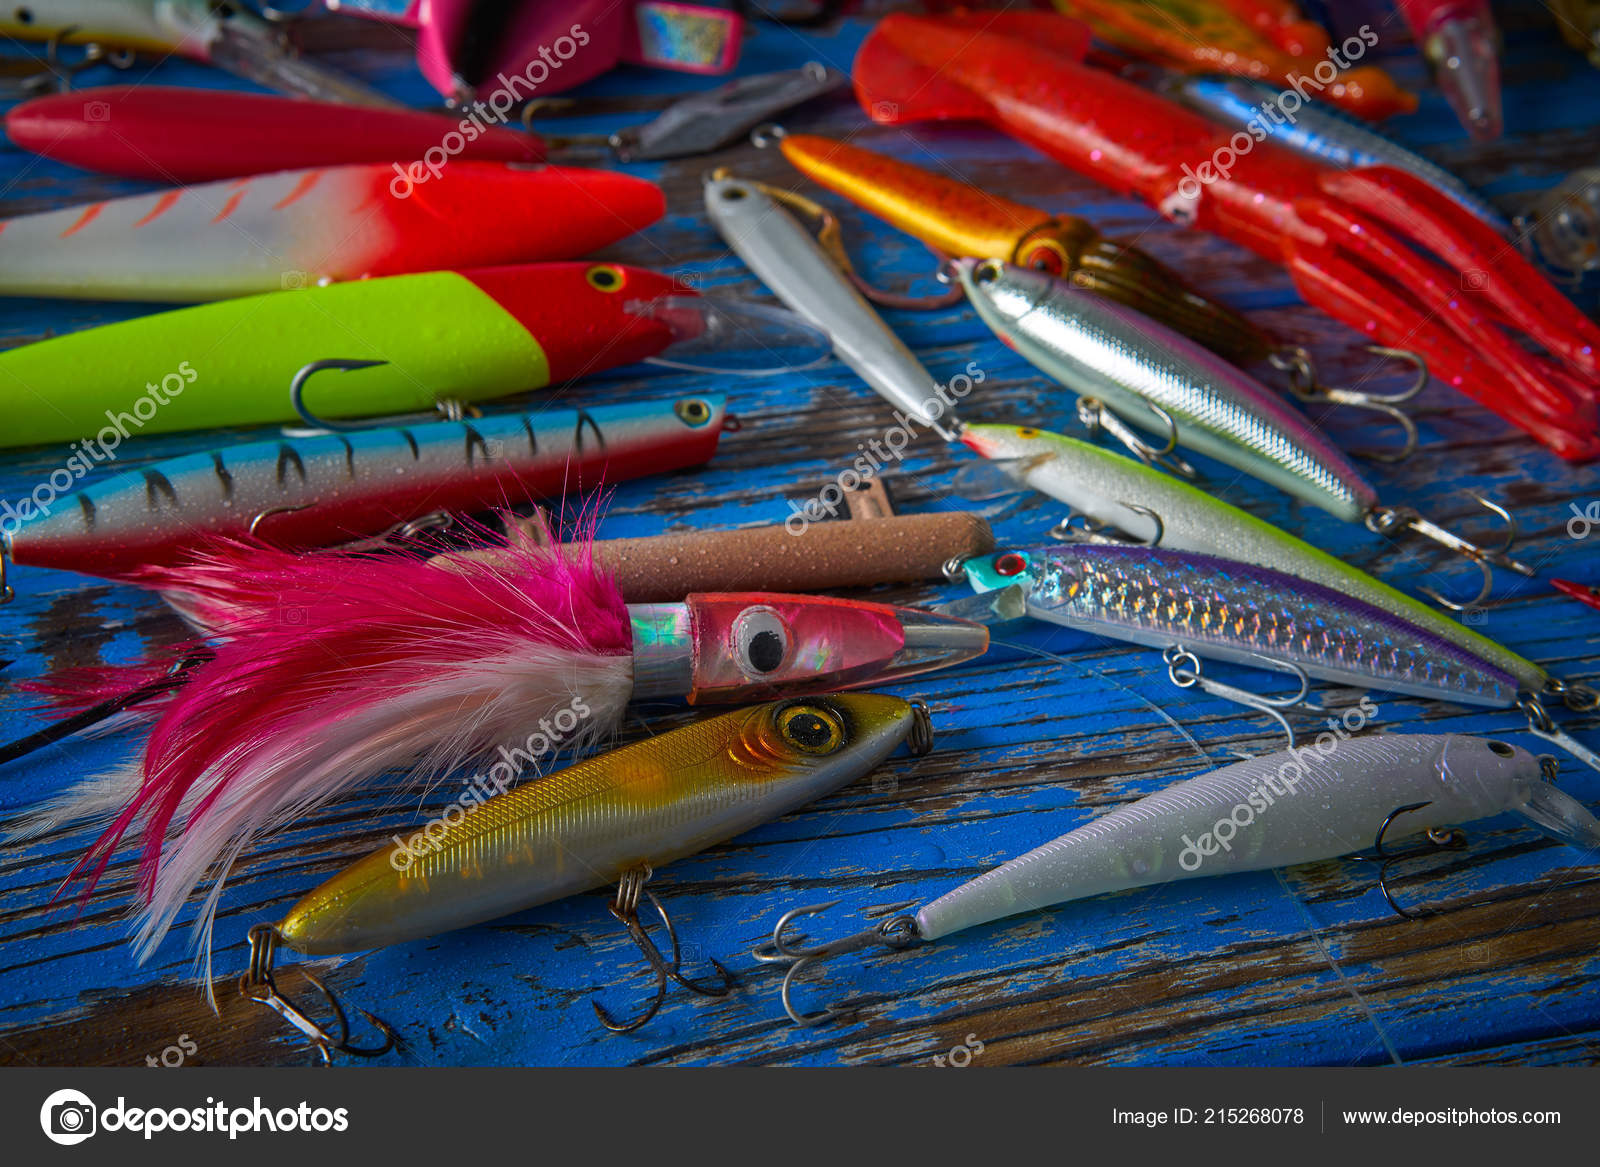 https://st4.depositphotos.com/1053932/21526/i/1600/depositphotos_215268078-stock-photo-fishing-lures-tackle-collection-saltwater.jpg